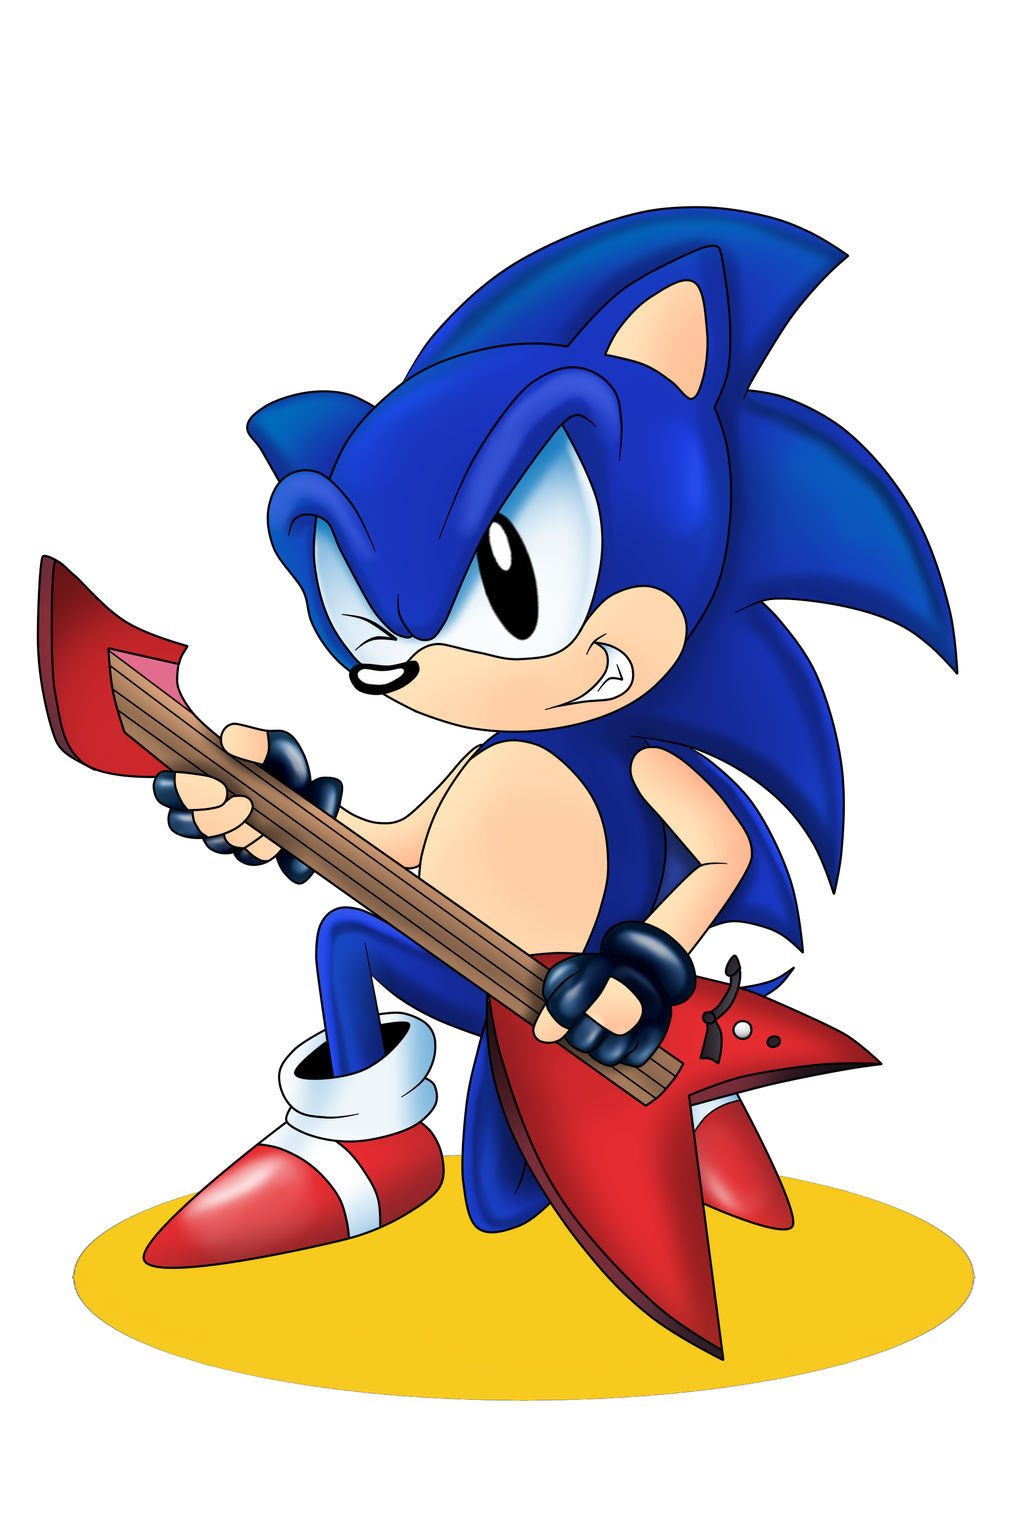 Sonic The Hedgehog 1991 by ClassicSonicSatAm on DeviantArt